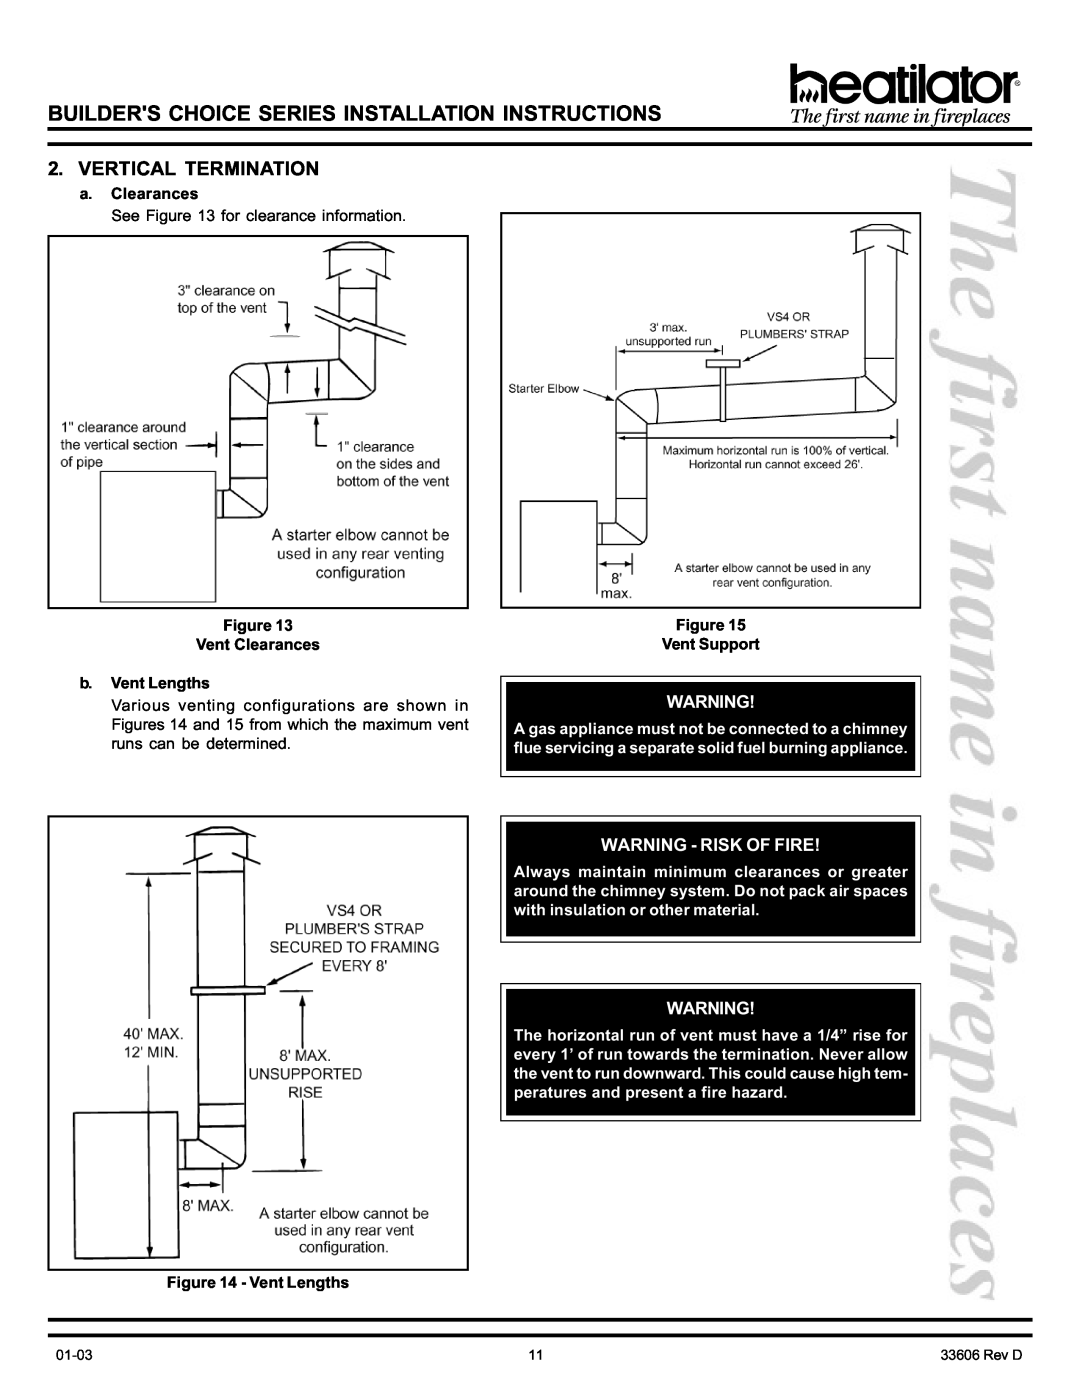 Heatiator BCDV36 manual Vertical Termination, a.Clearances, Figure Vent Clearances b.Vent Lengths, Figure Vent Support 